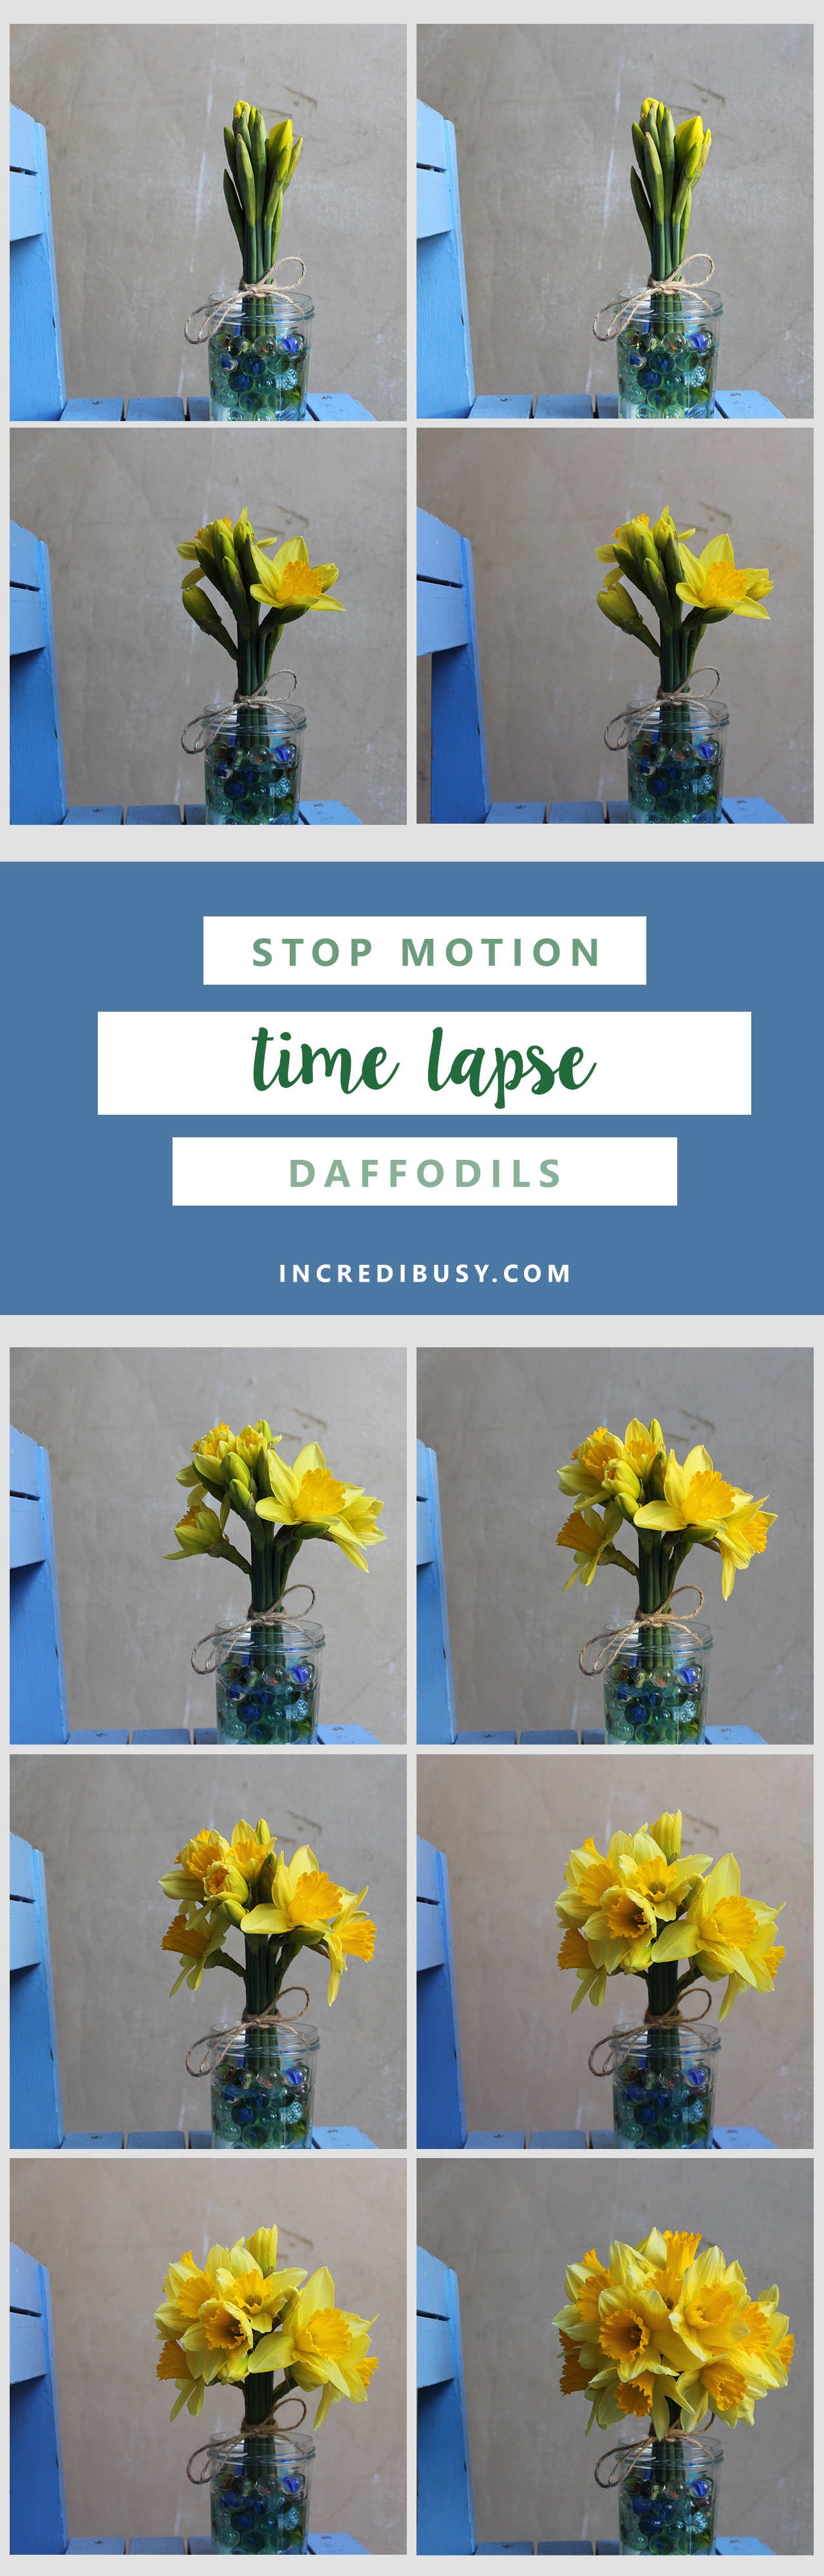 Daffodils-Incredibusy-pinterest